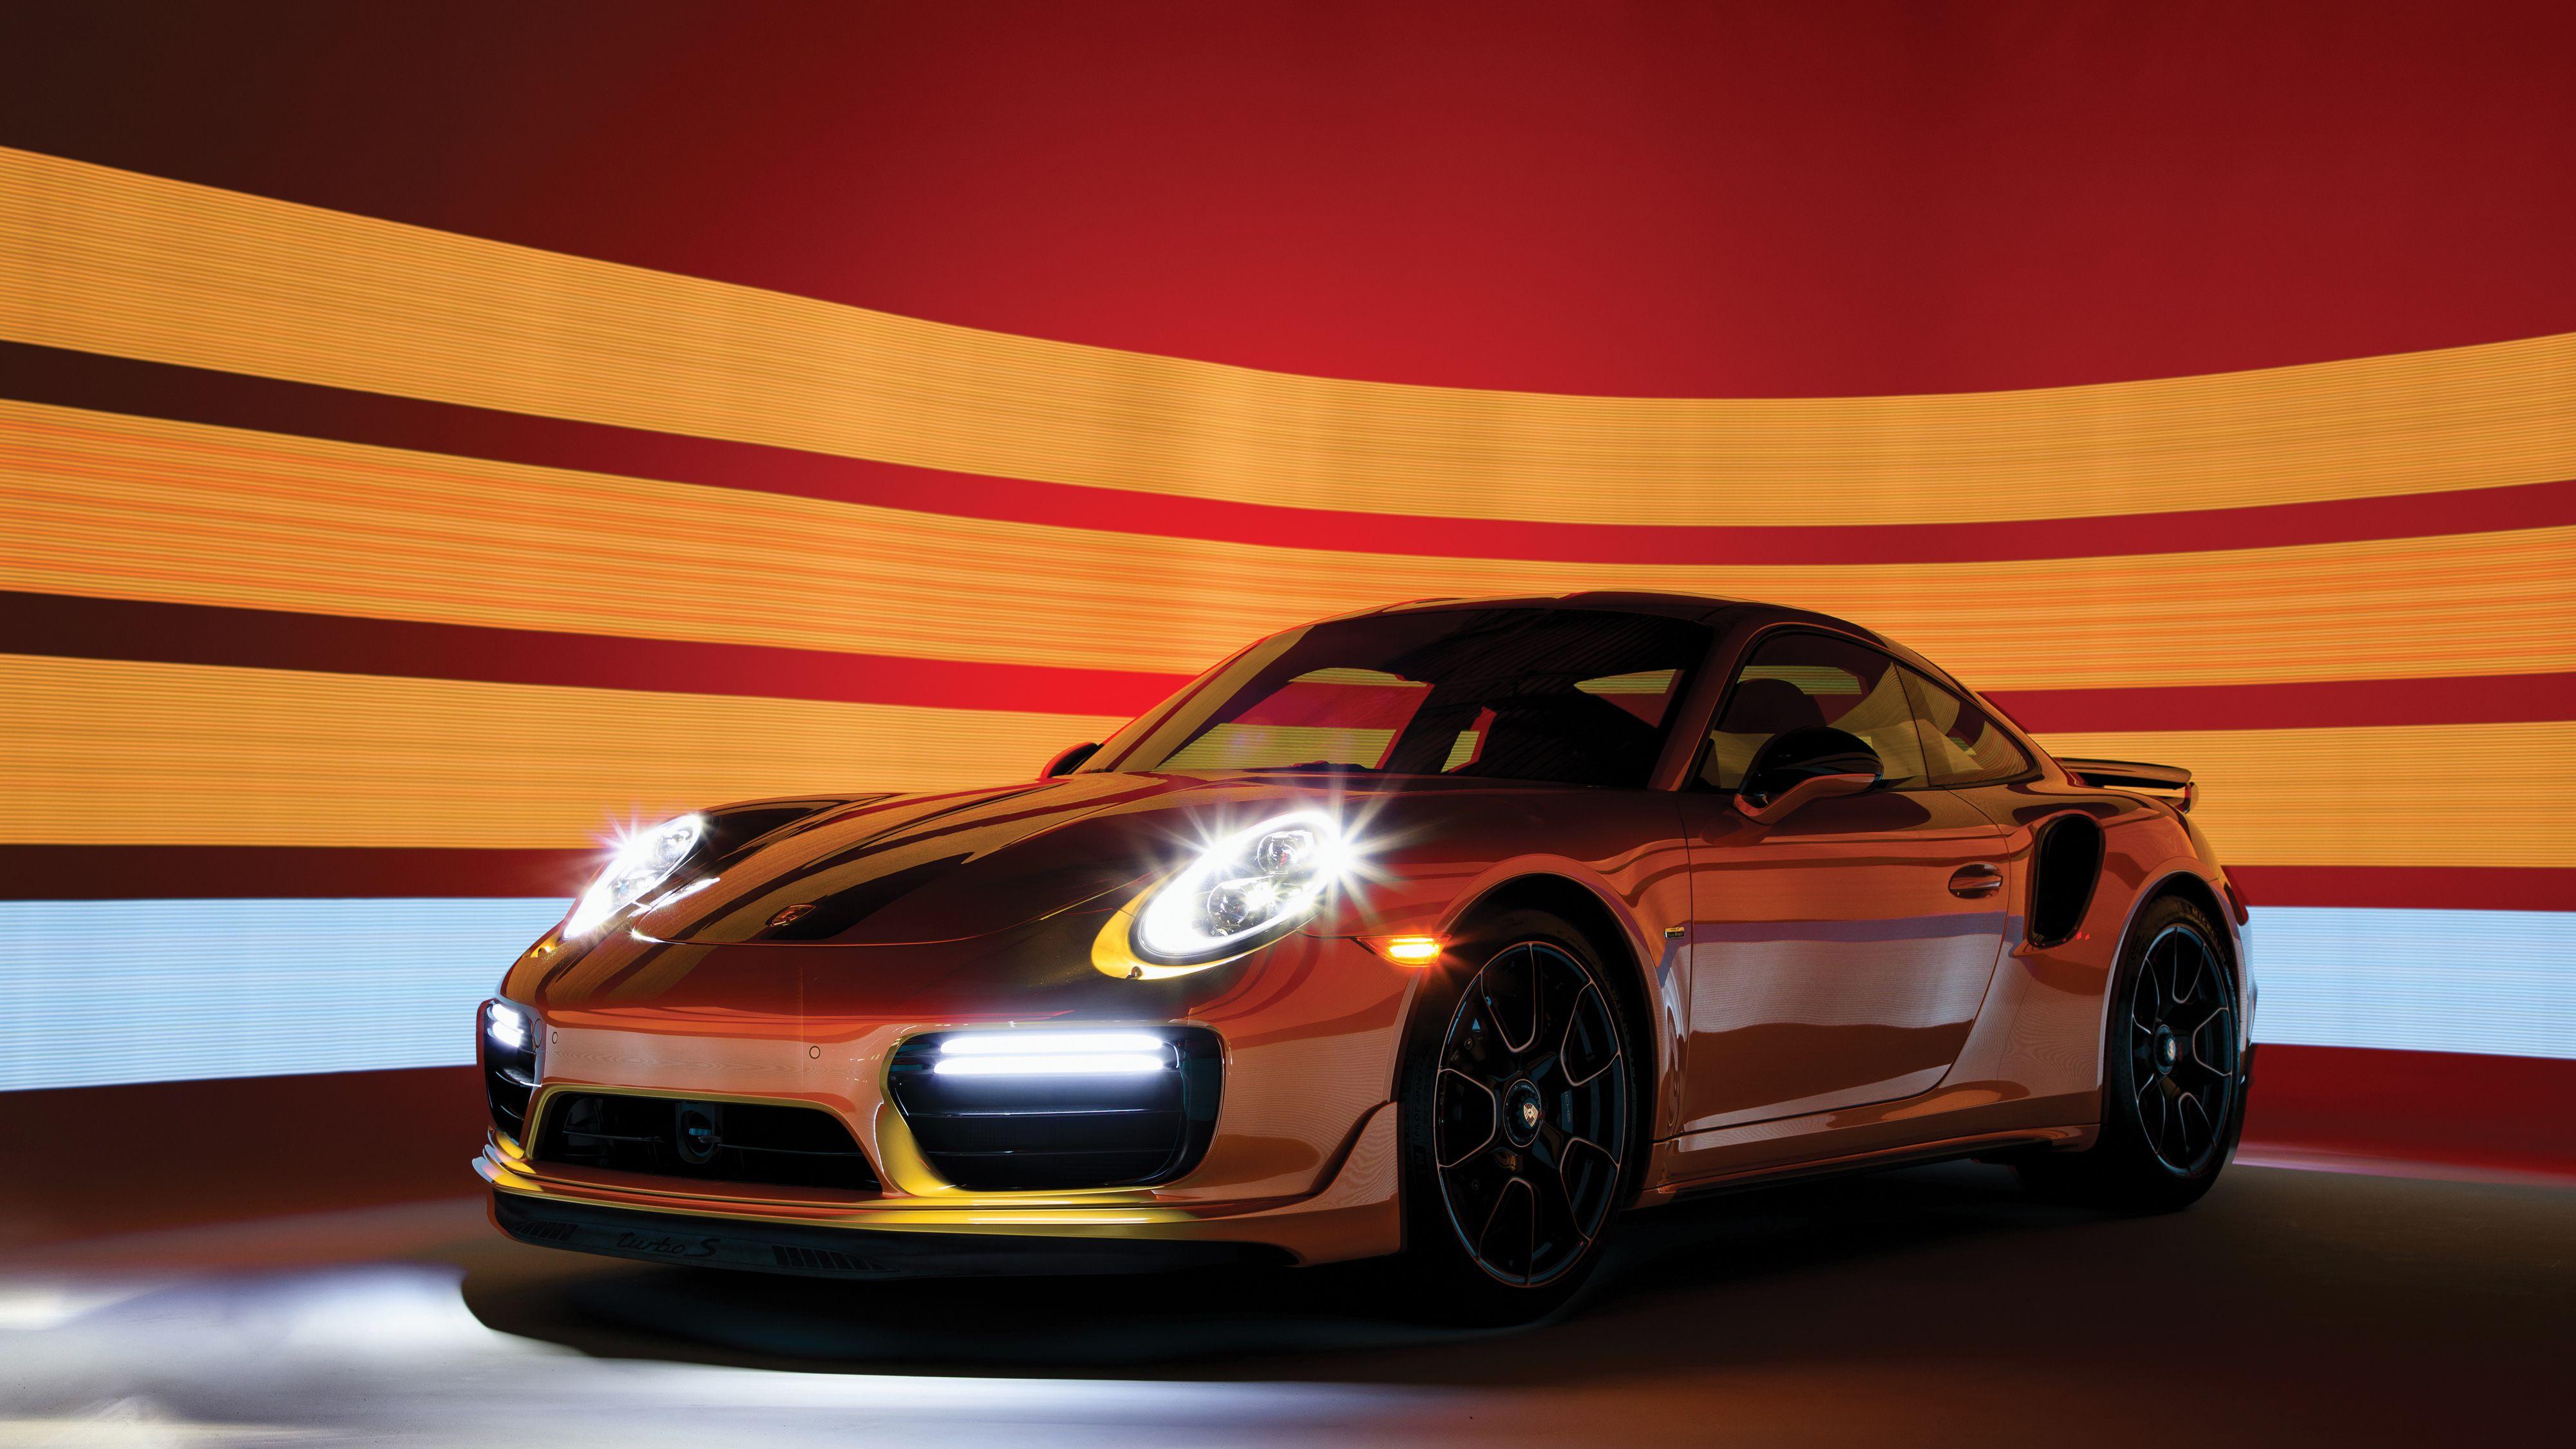 Porsche 911 Turbo S Wallpapers Top Free Porsche 911 Turbo S Backgrounds Wallpaperaccess